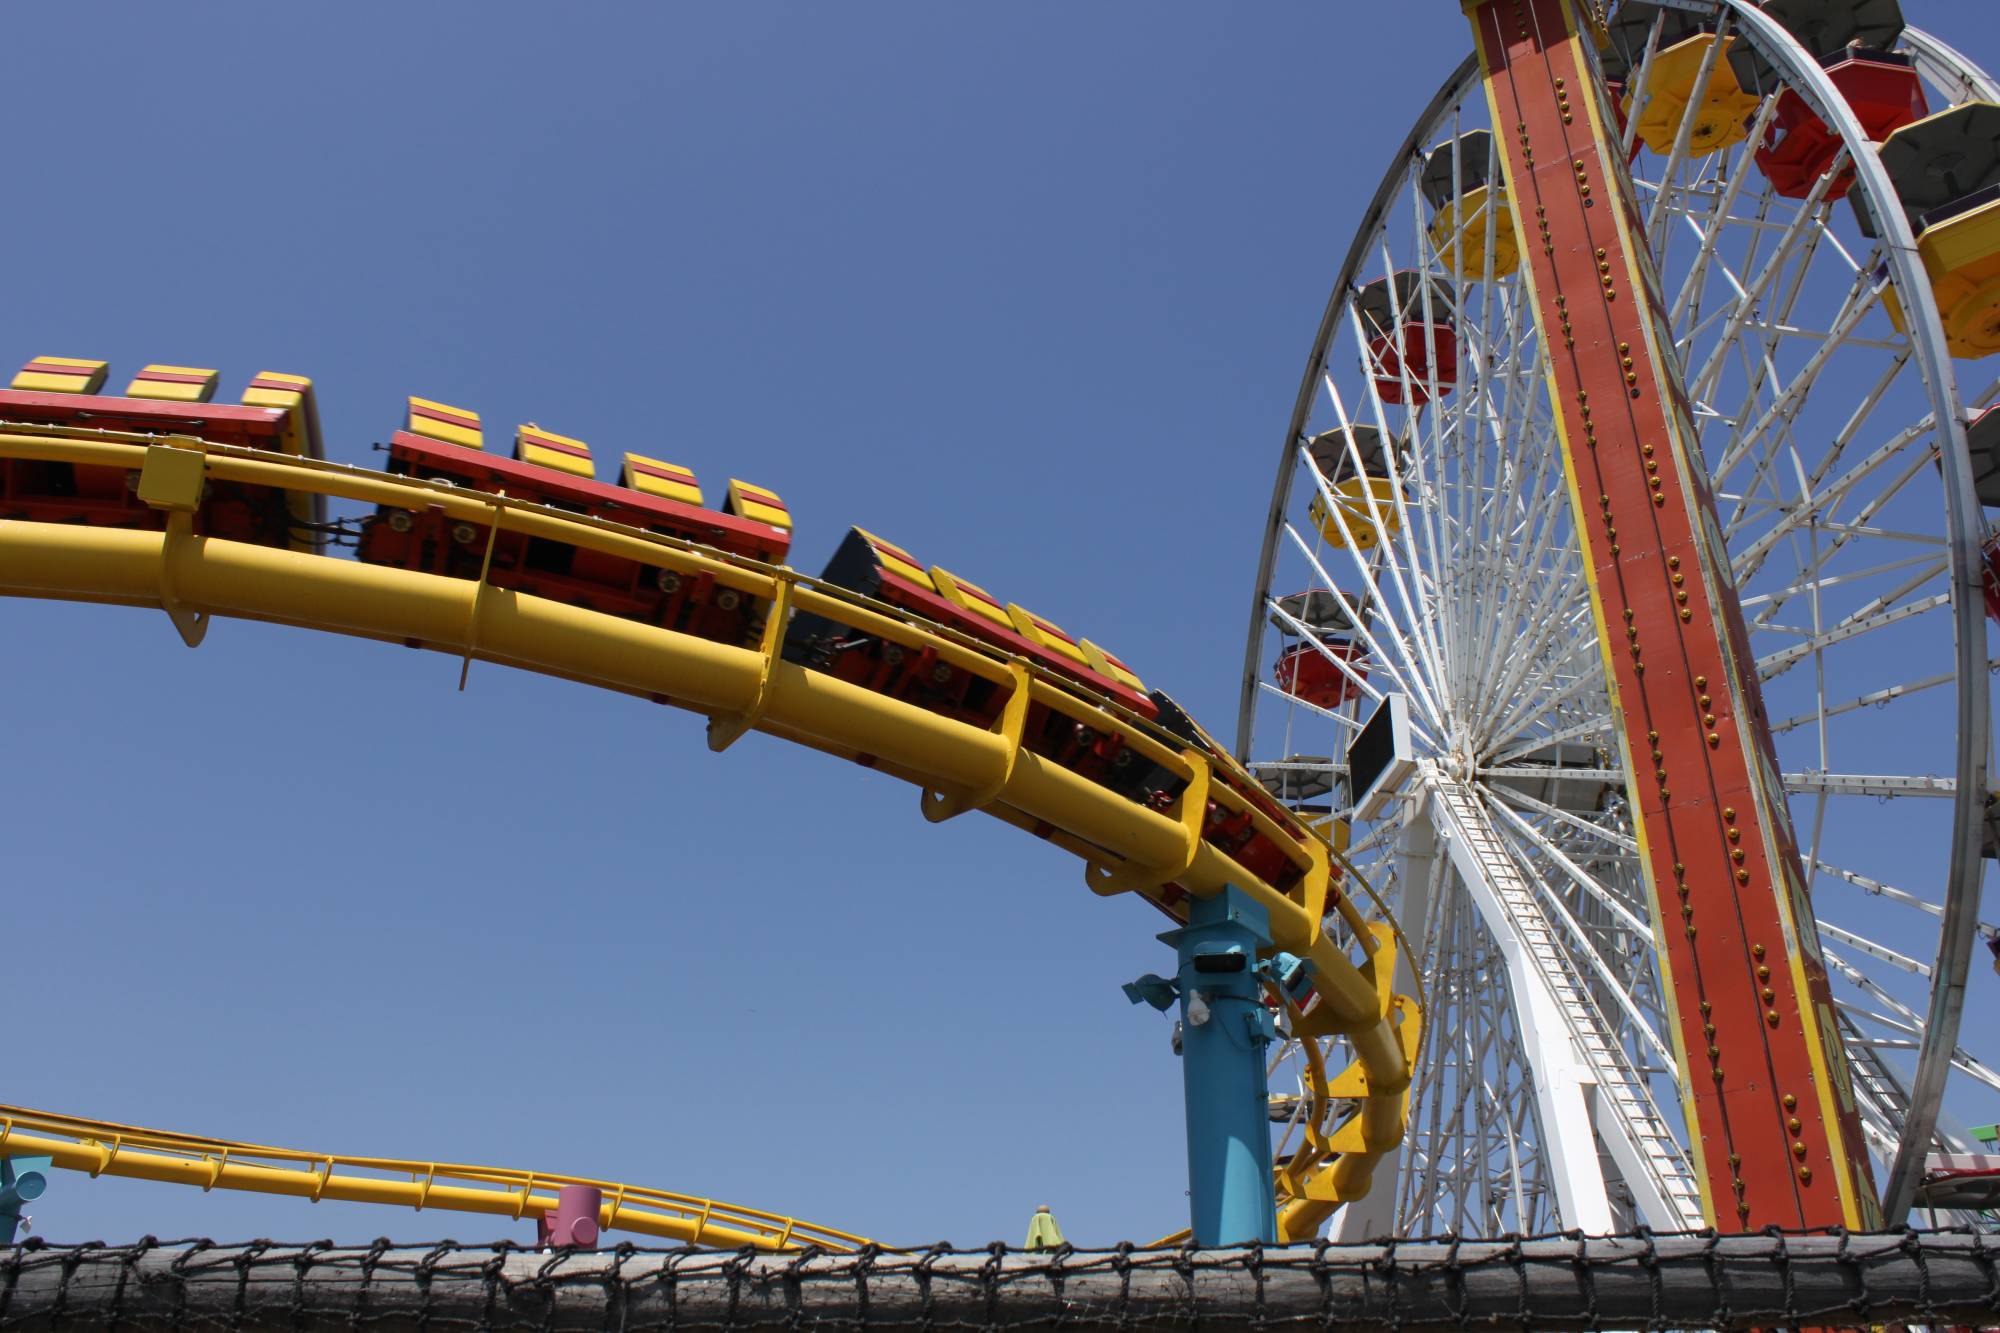 Santa Monica Pier - Pacific Park ferris wheel and roller coaster